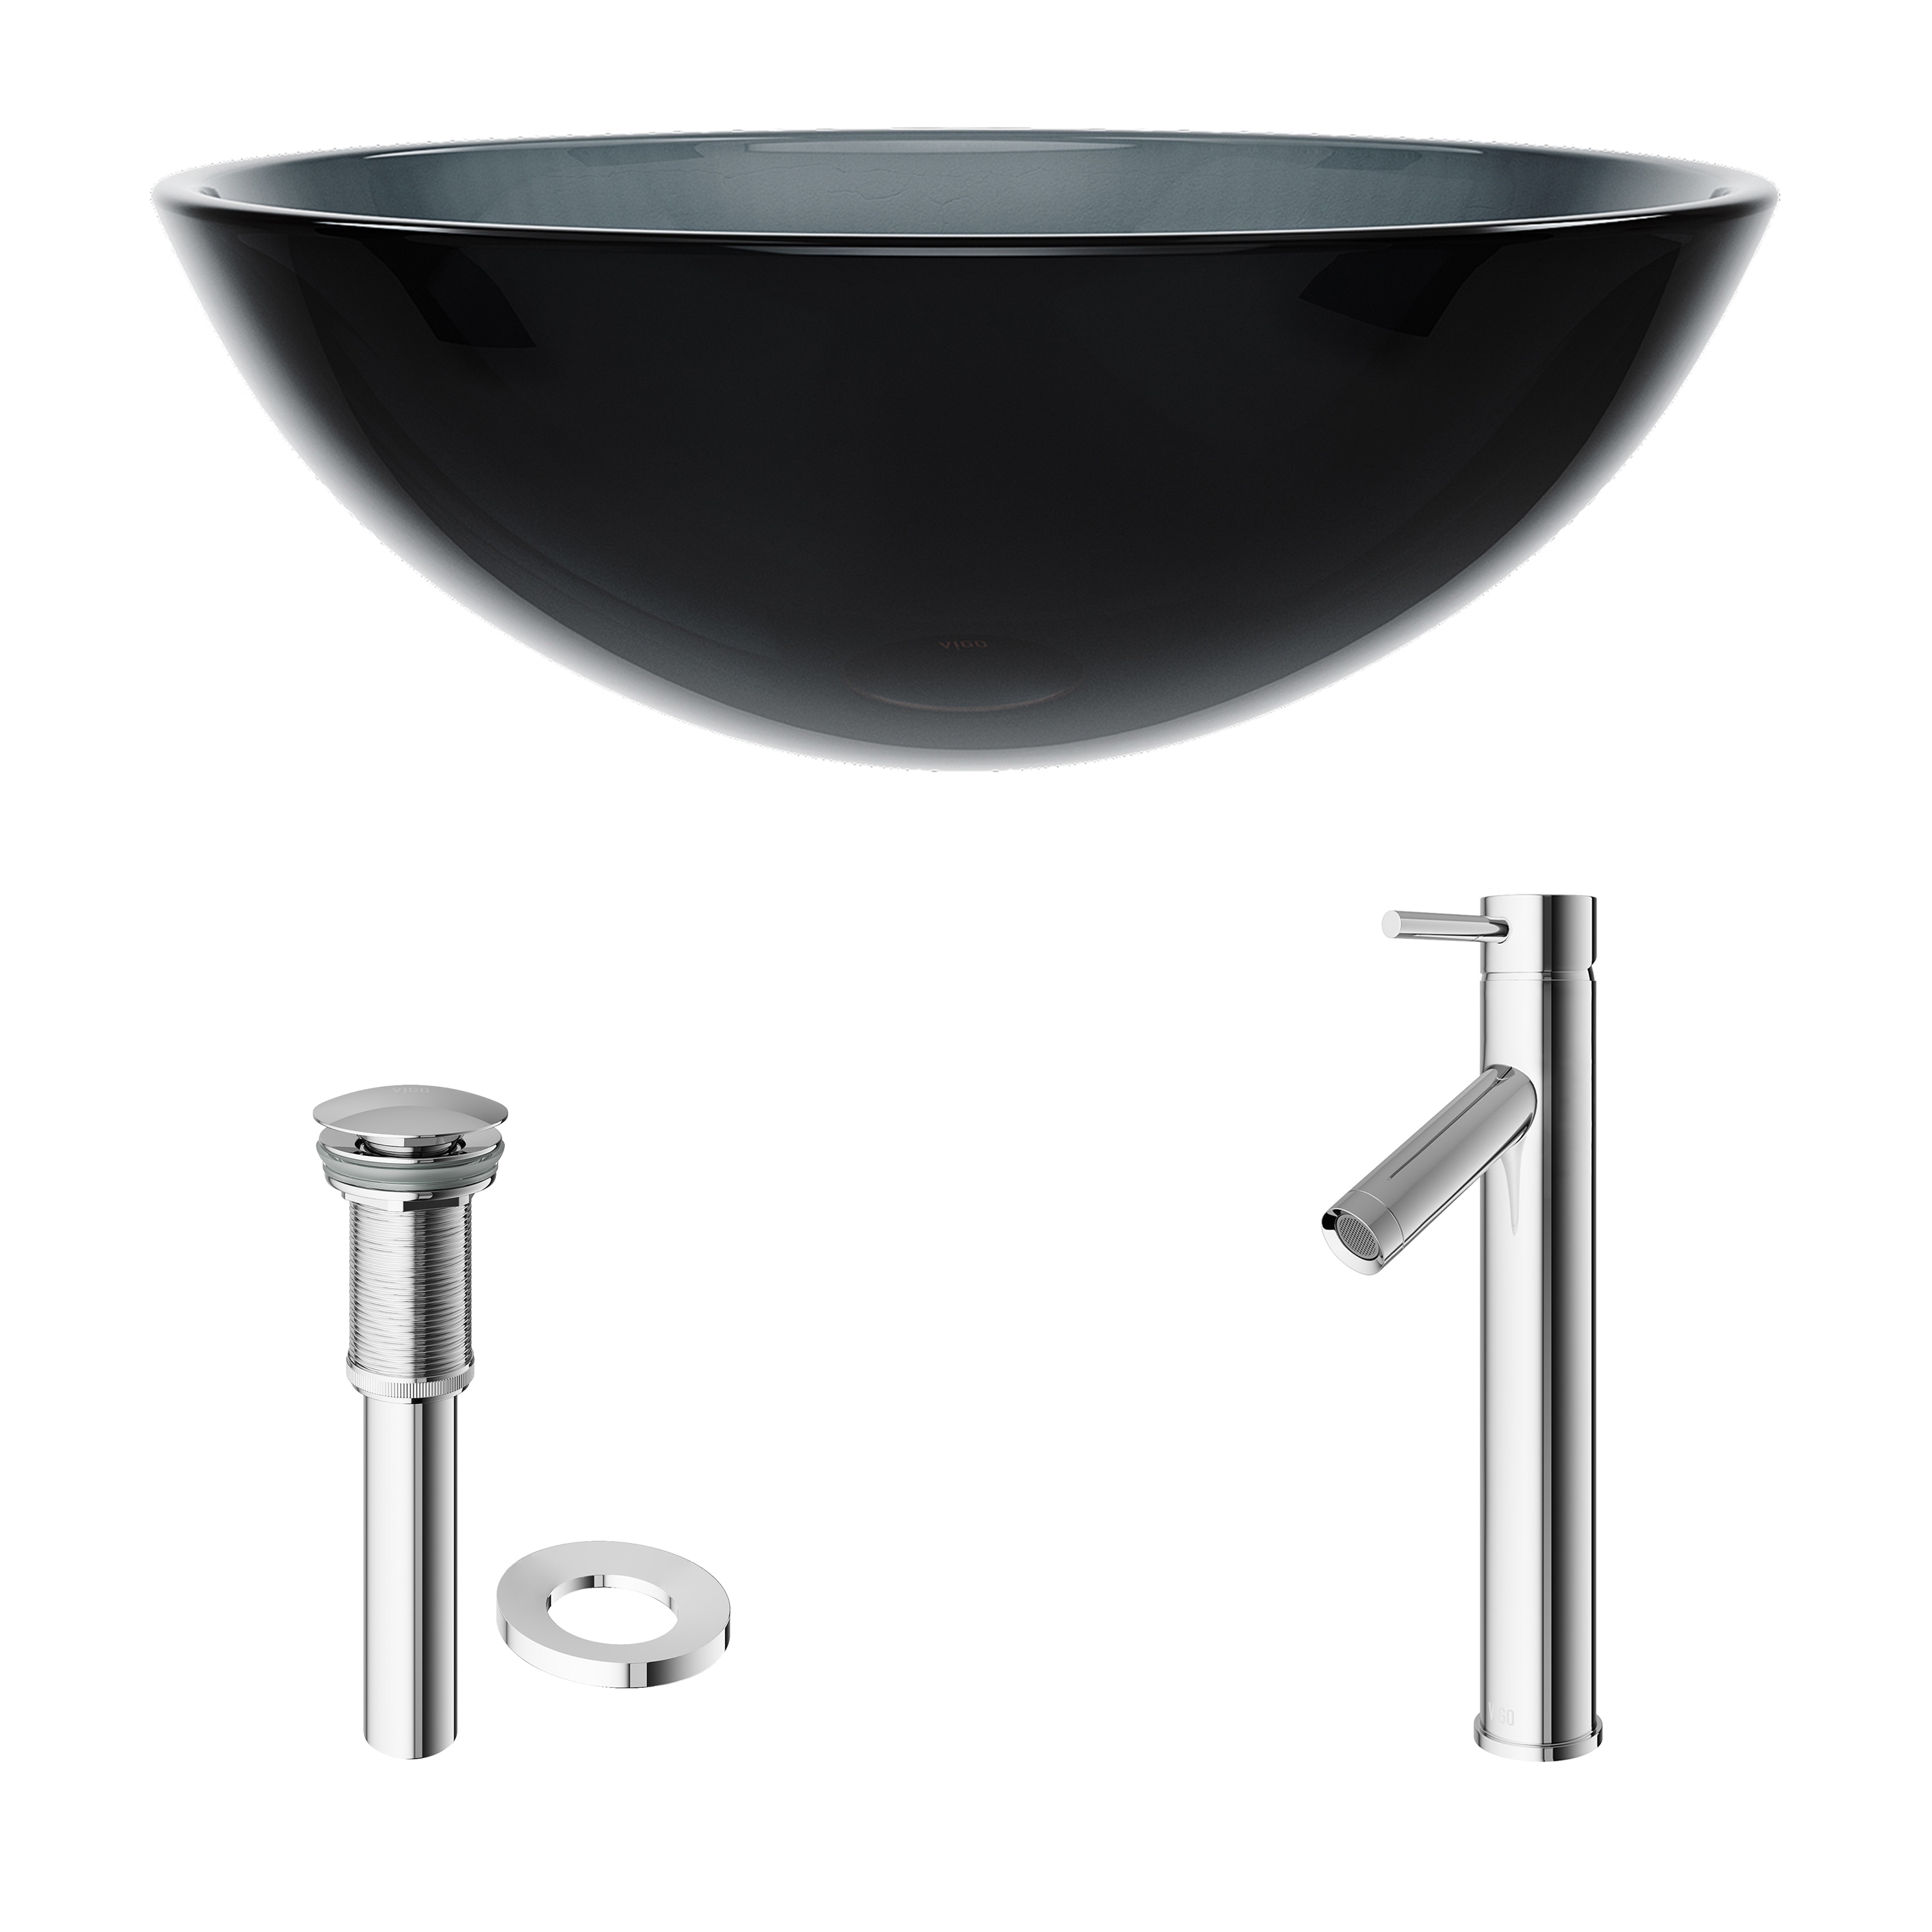 Begursa Black Cast Iron Bathroom Vessel Sink. Bowl Sink.